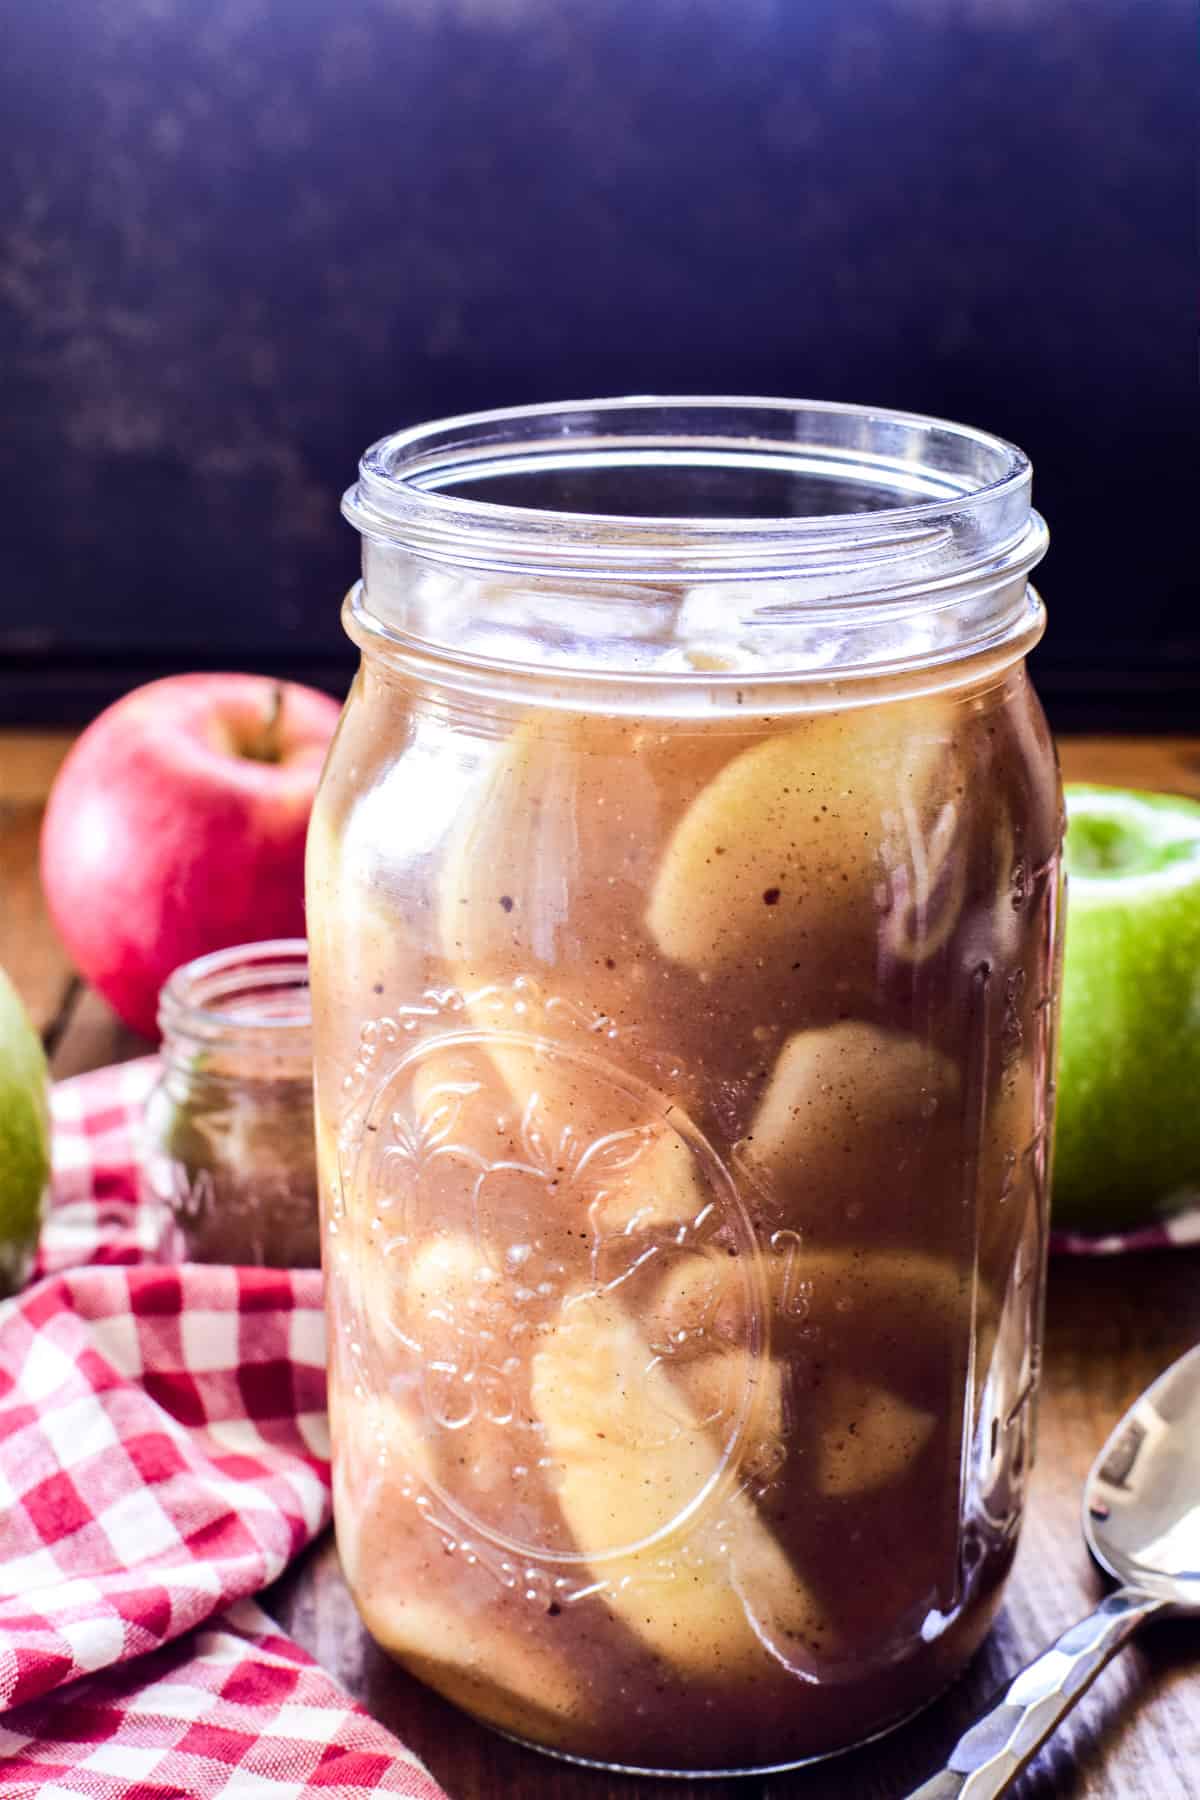 Glass Mason jar with homemade apple pie filling